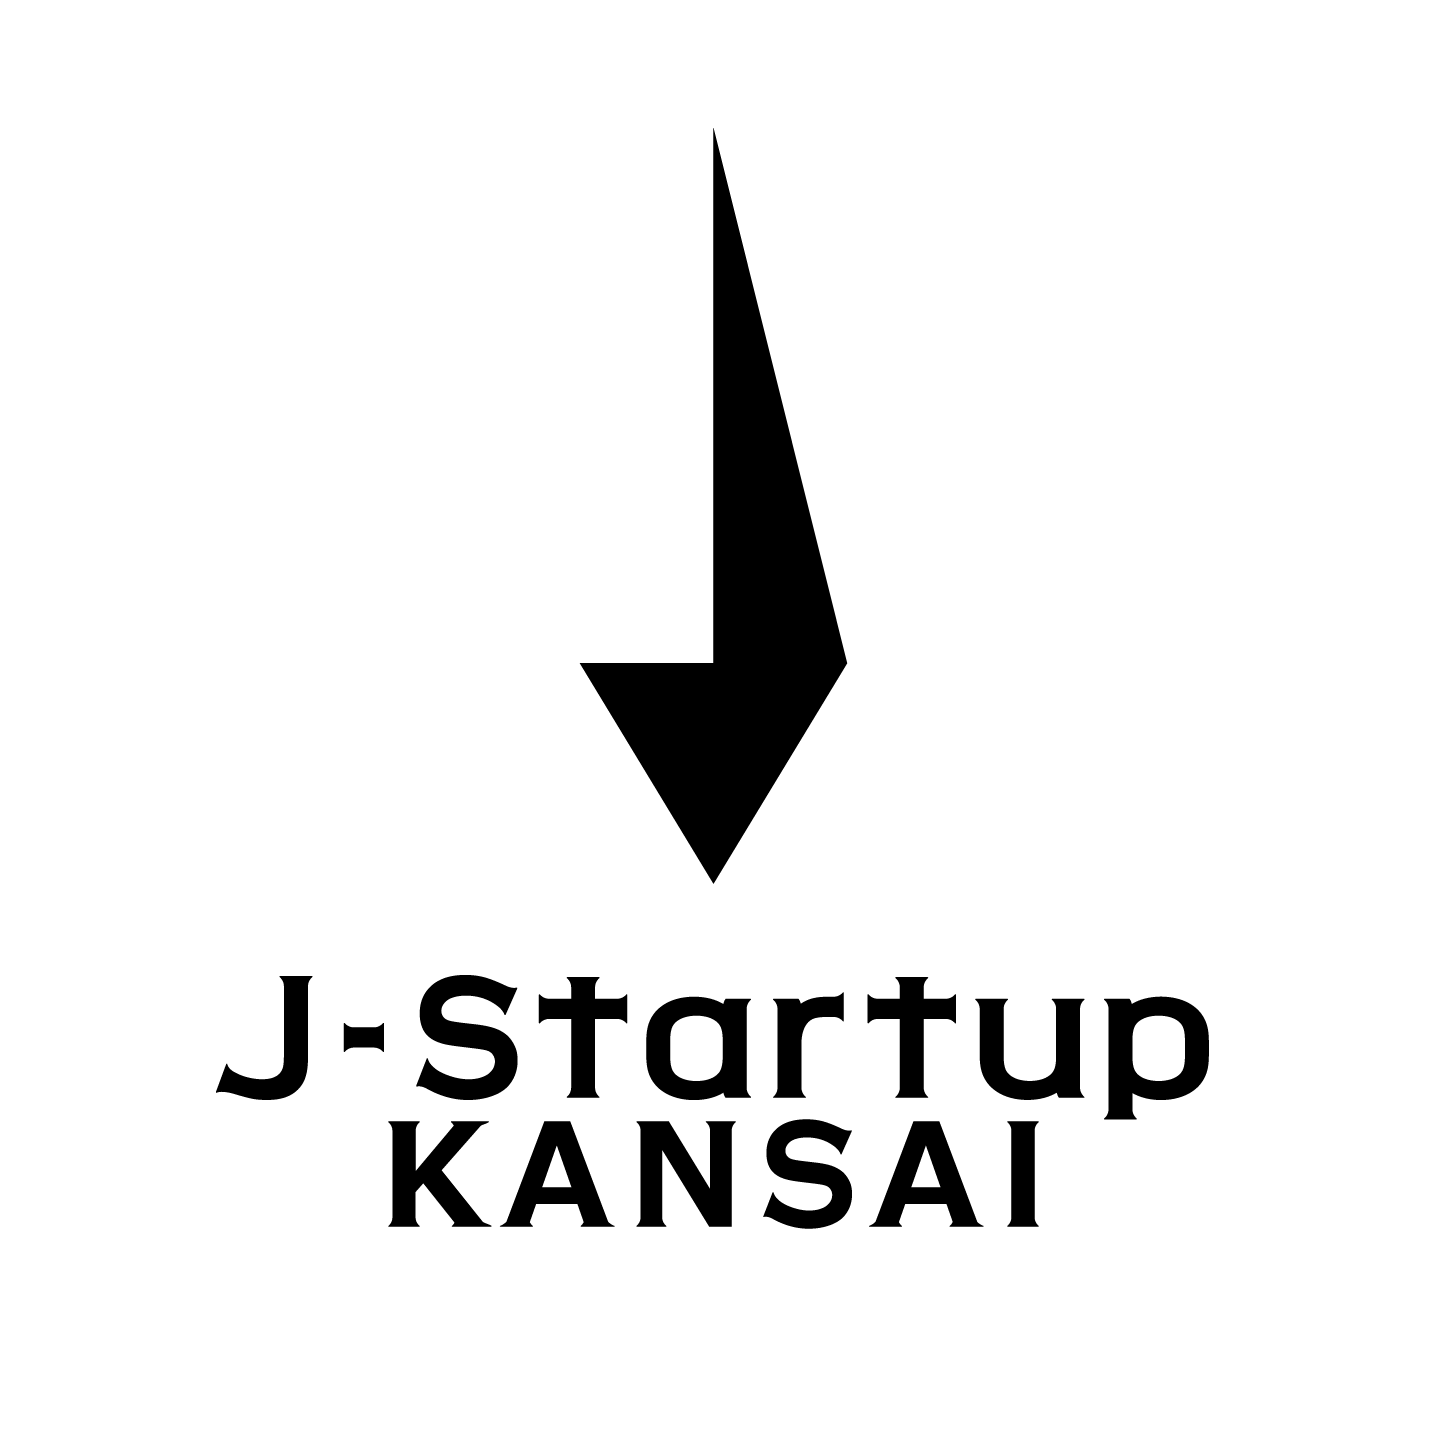 「J-Startup KANSAI」の新たな選定企業を発表～応募枠を勝ち抜いた5社を新たに選定～